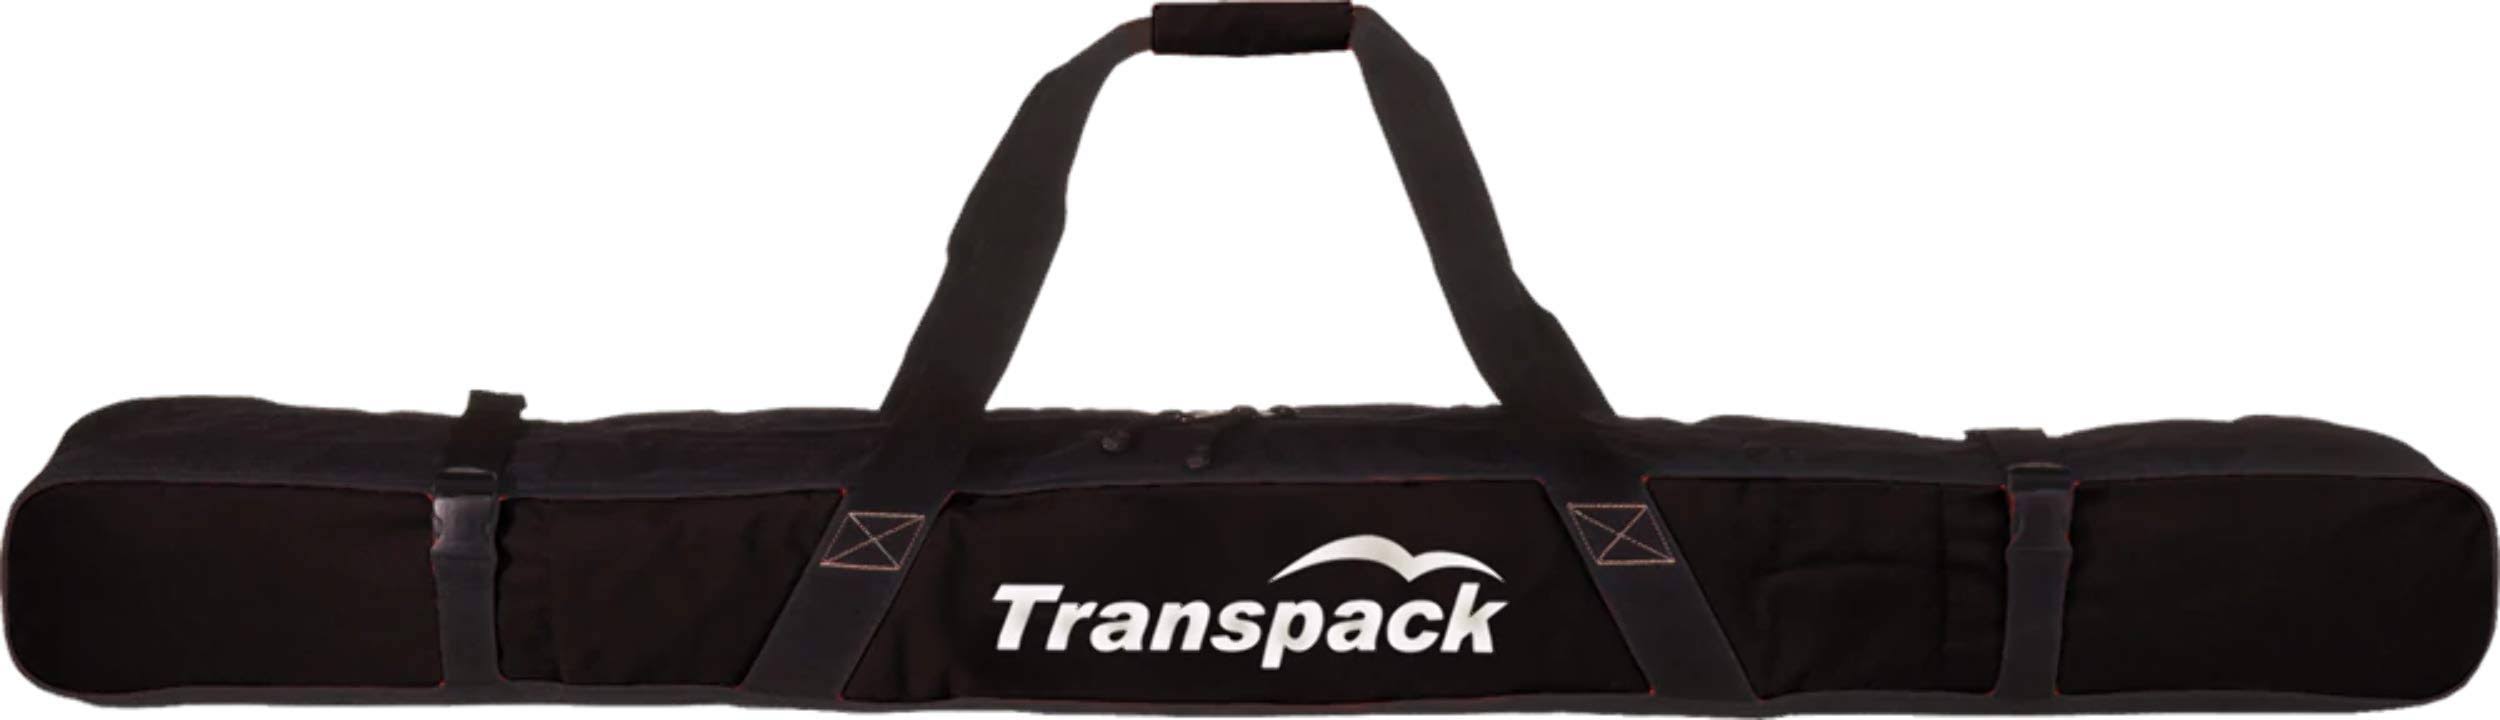 Transpack Single Ski Bag